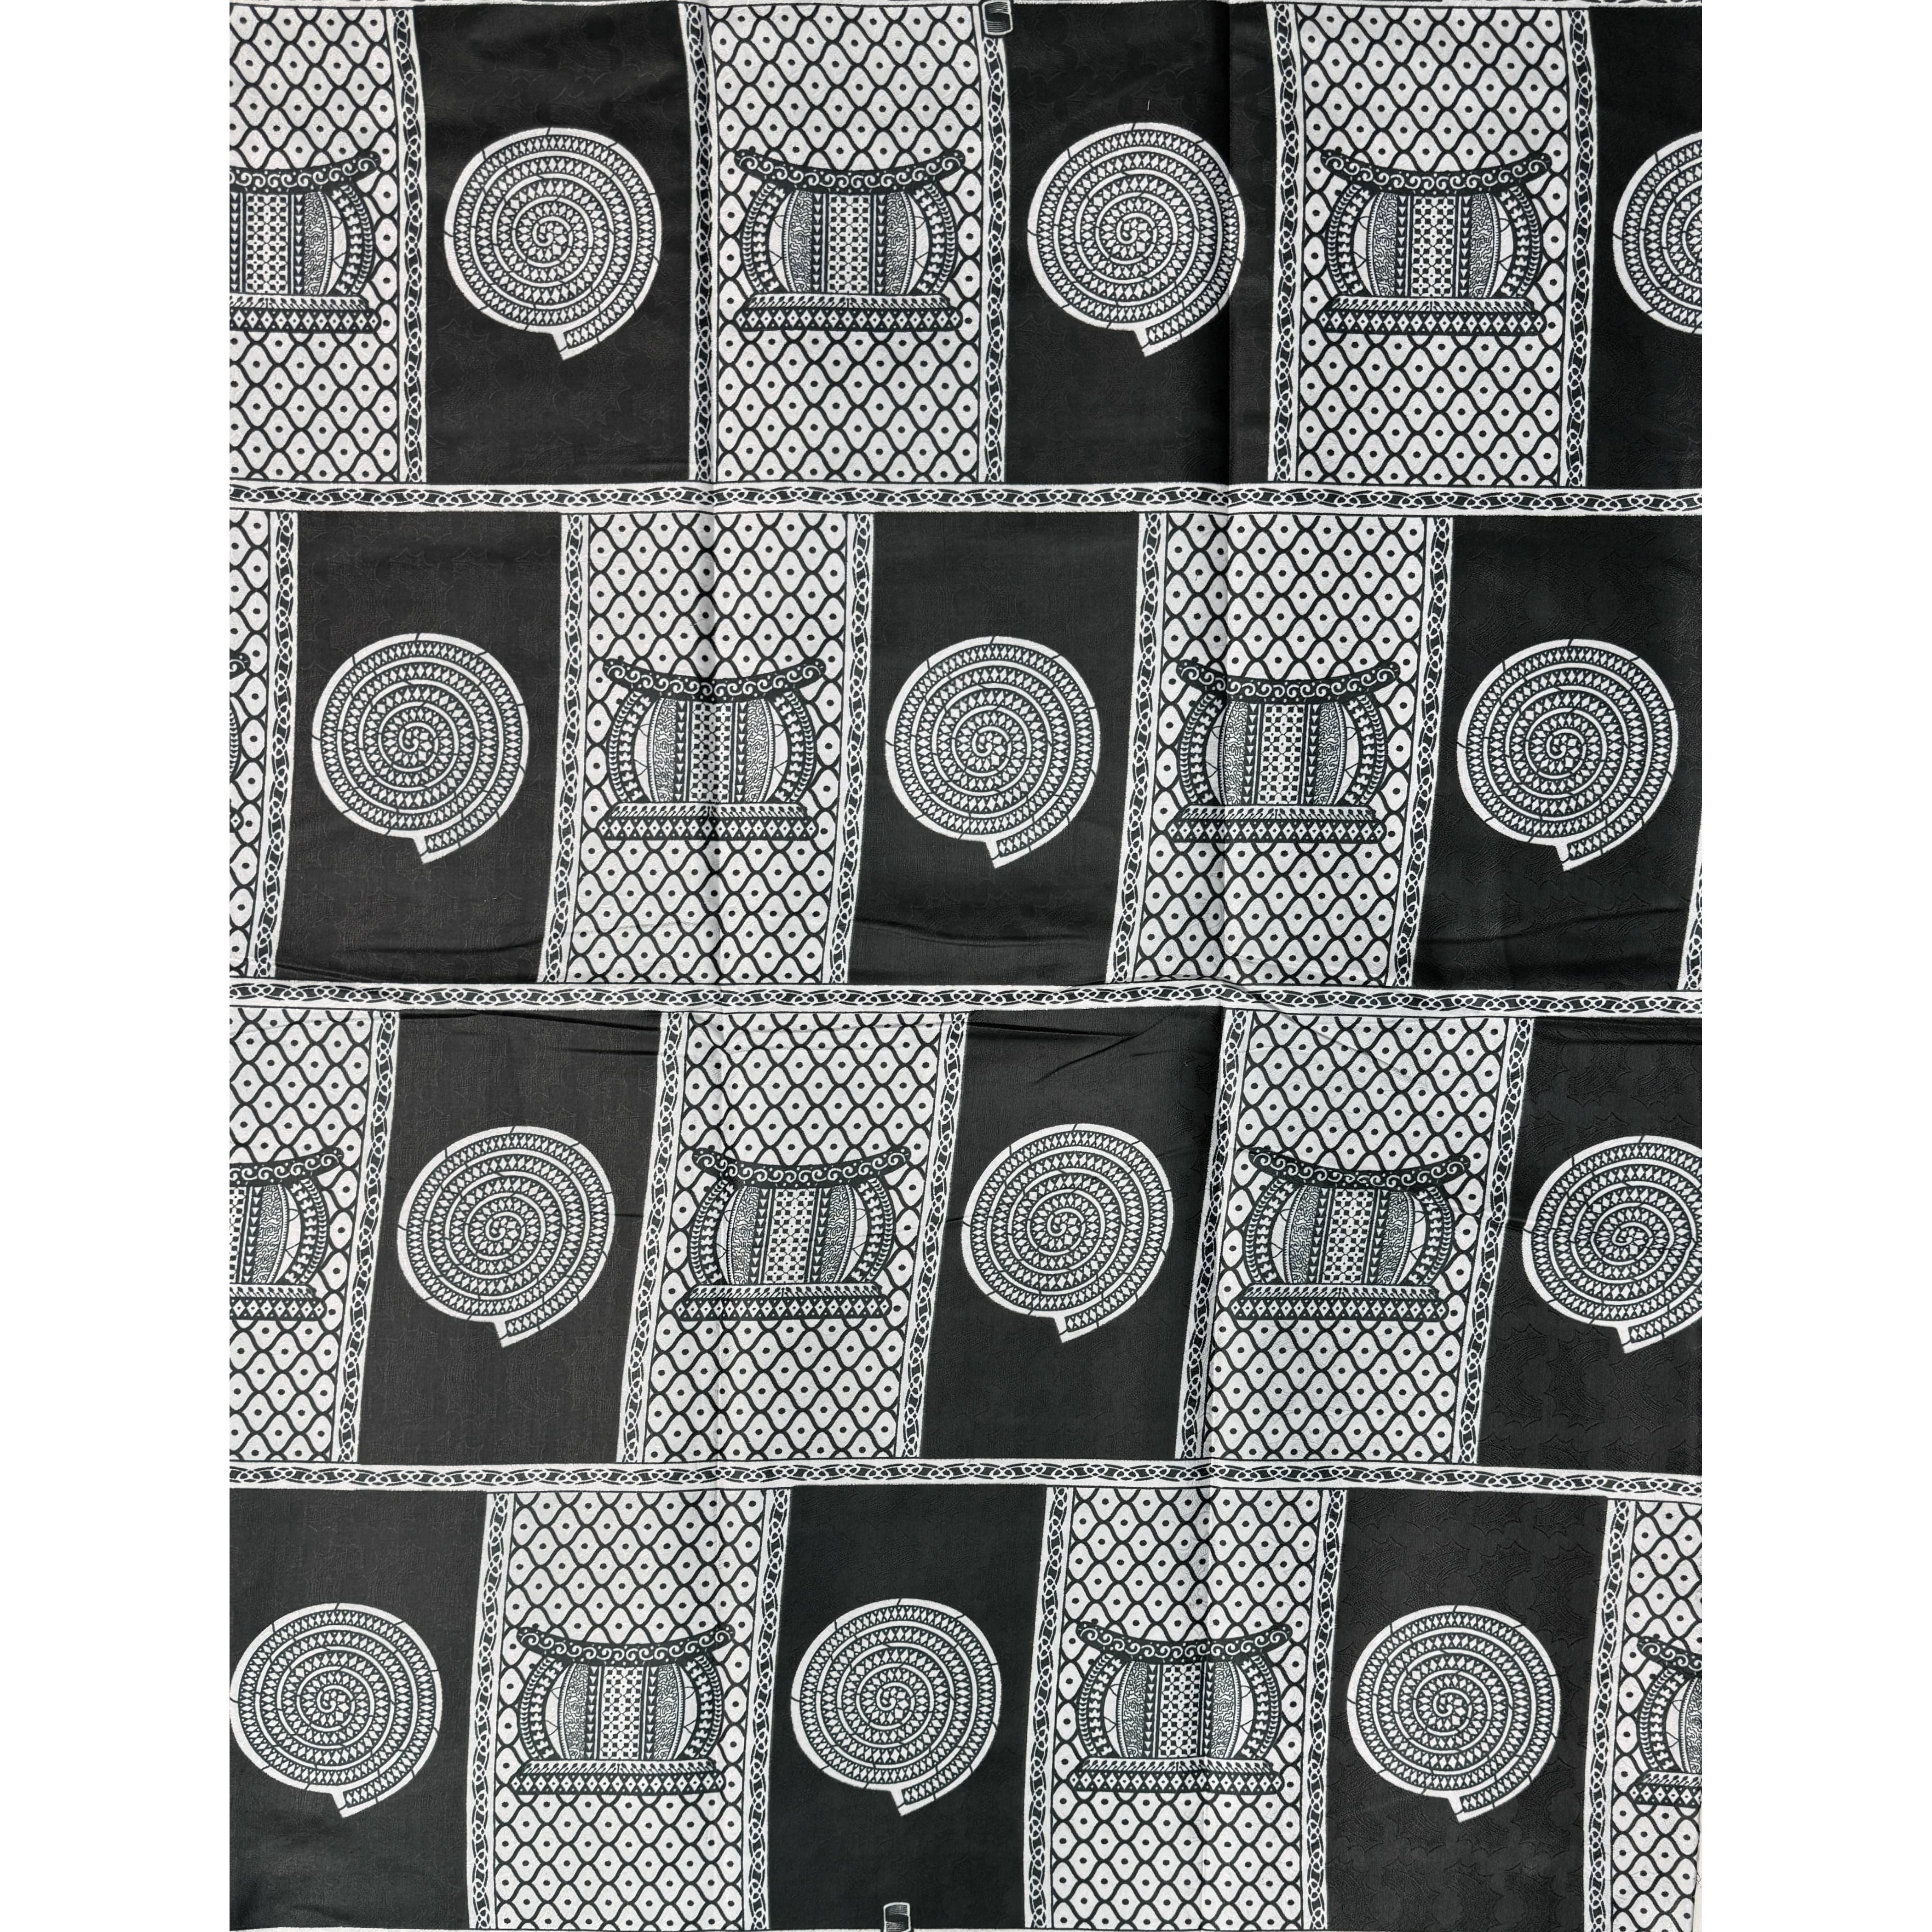 Bazin Wax Pagne Africain - Tissu 6 Yards Coton - BLANC / NOIR